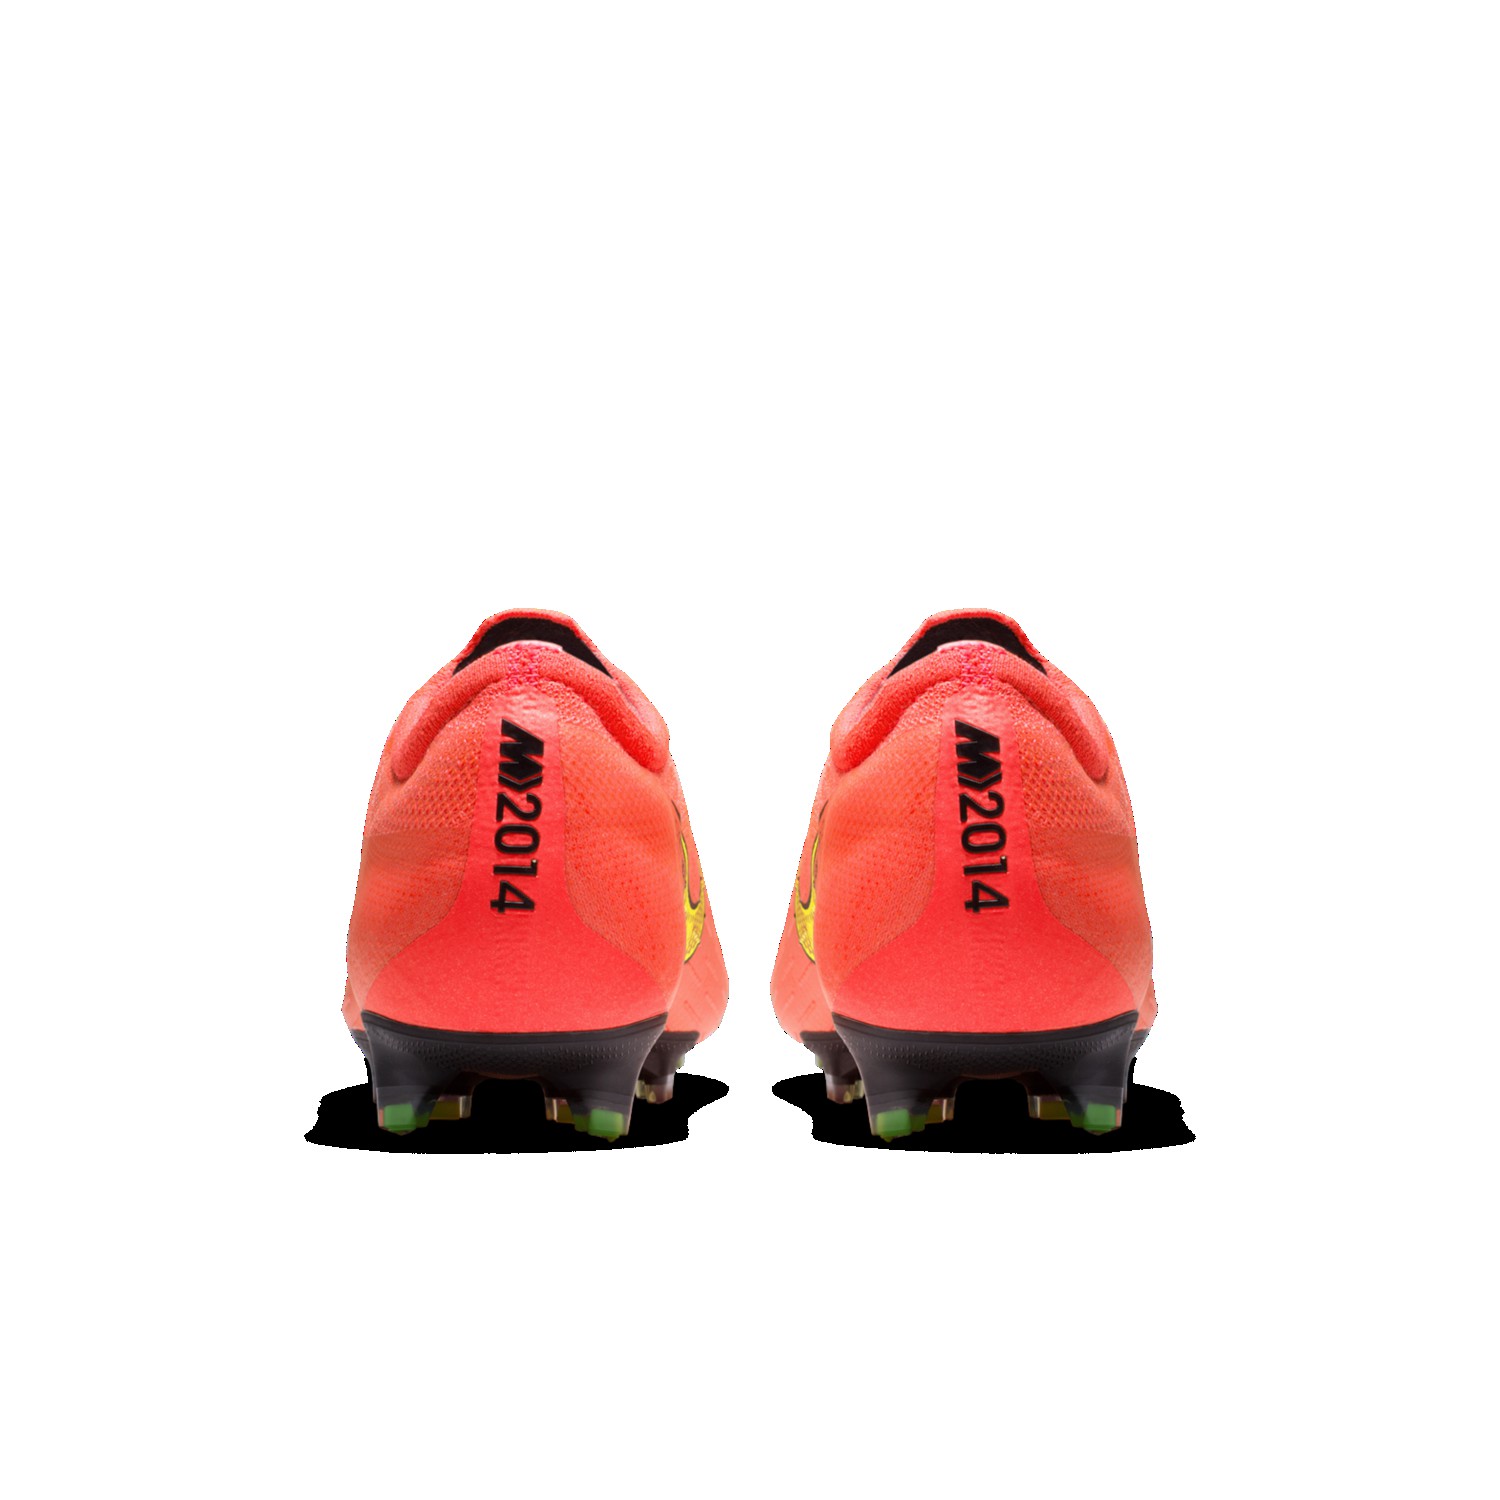 Nike Soccer Shoes Nike Mercurial Vapor Superfly III FG